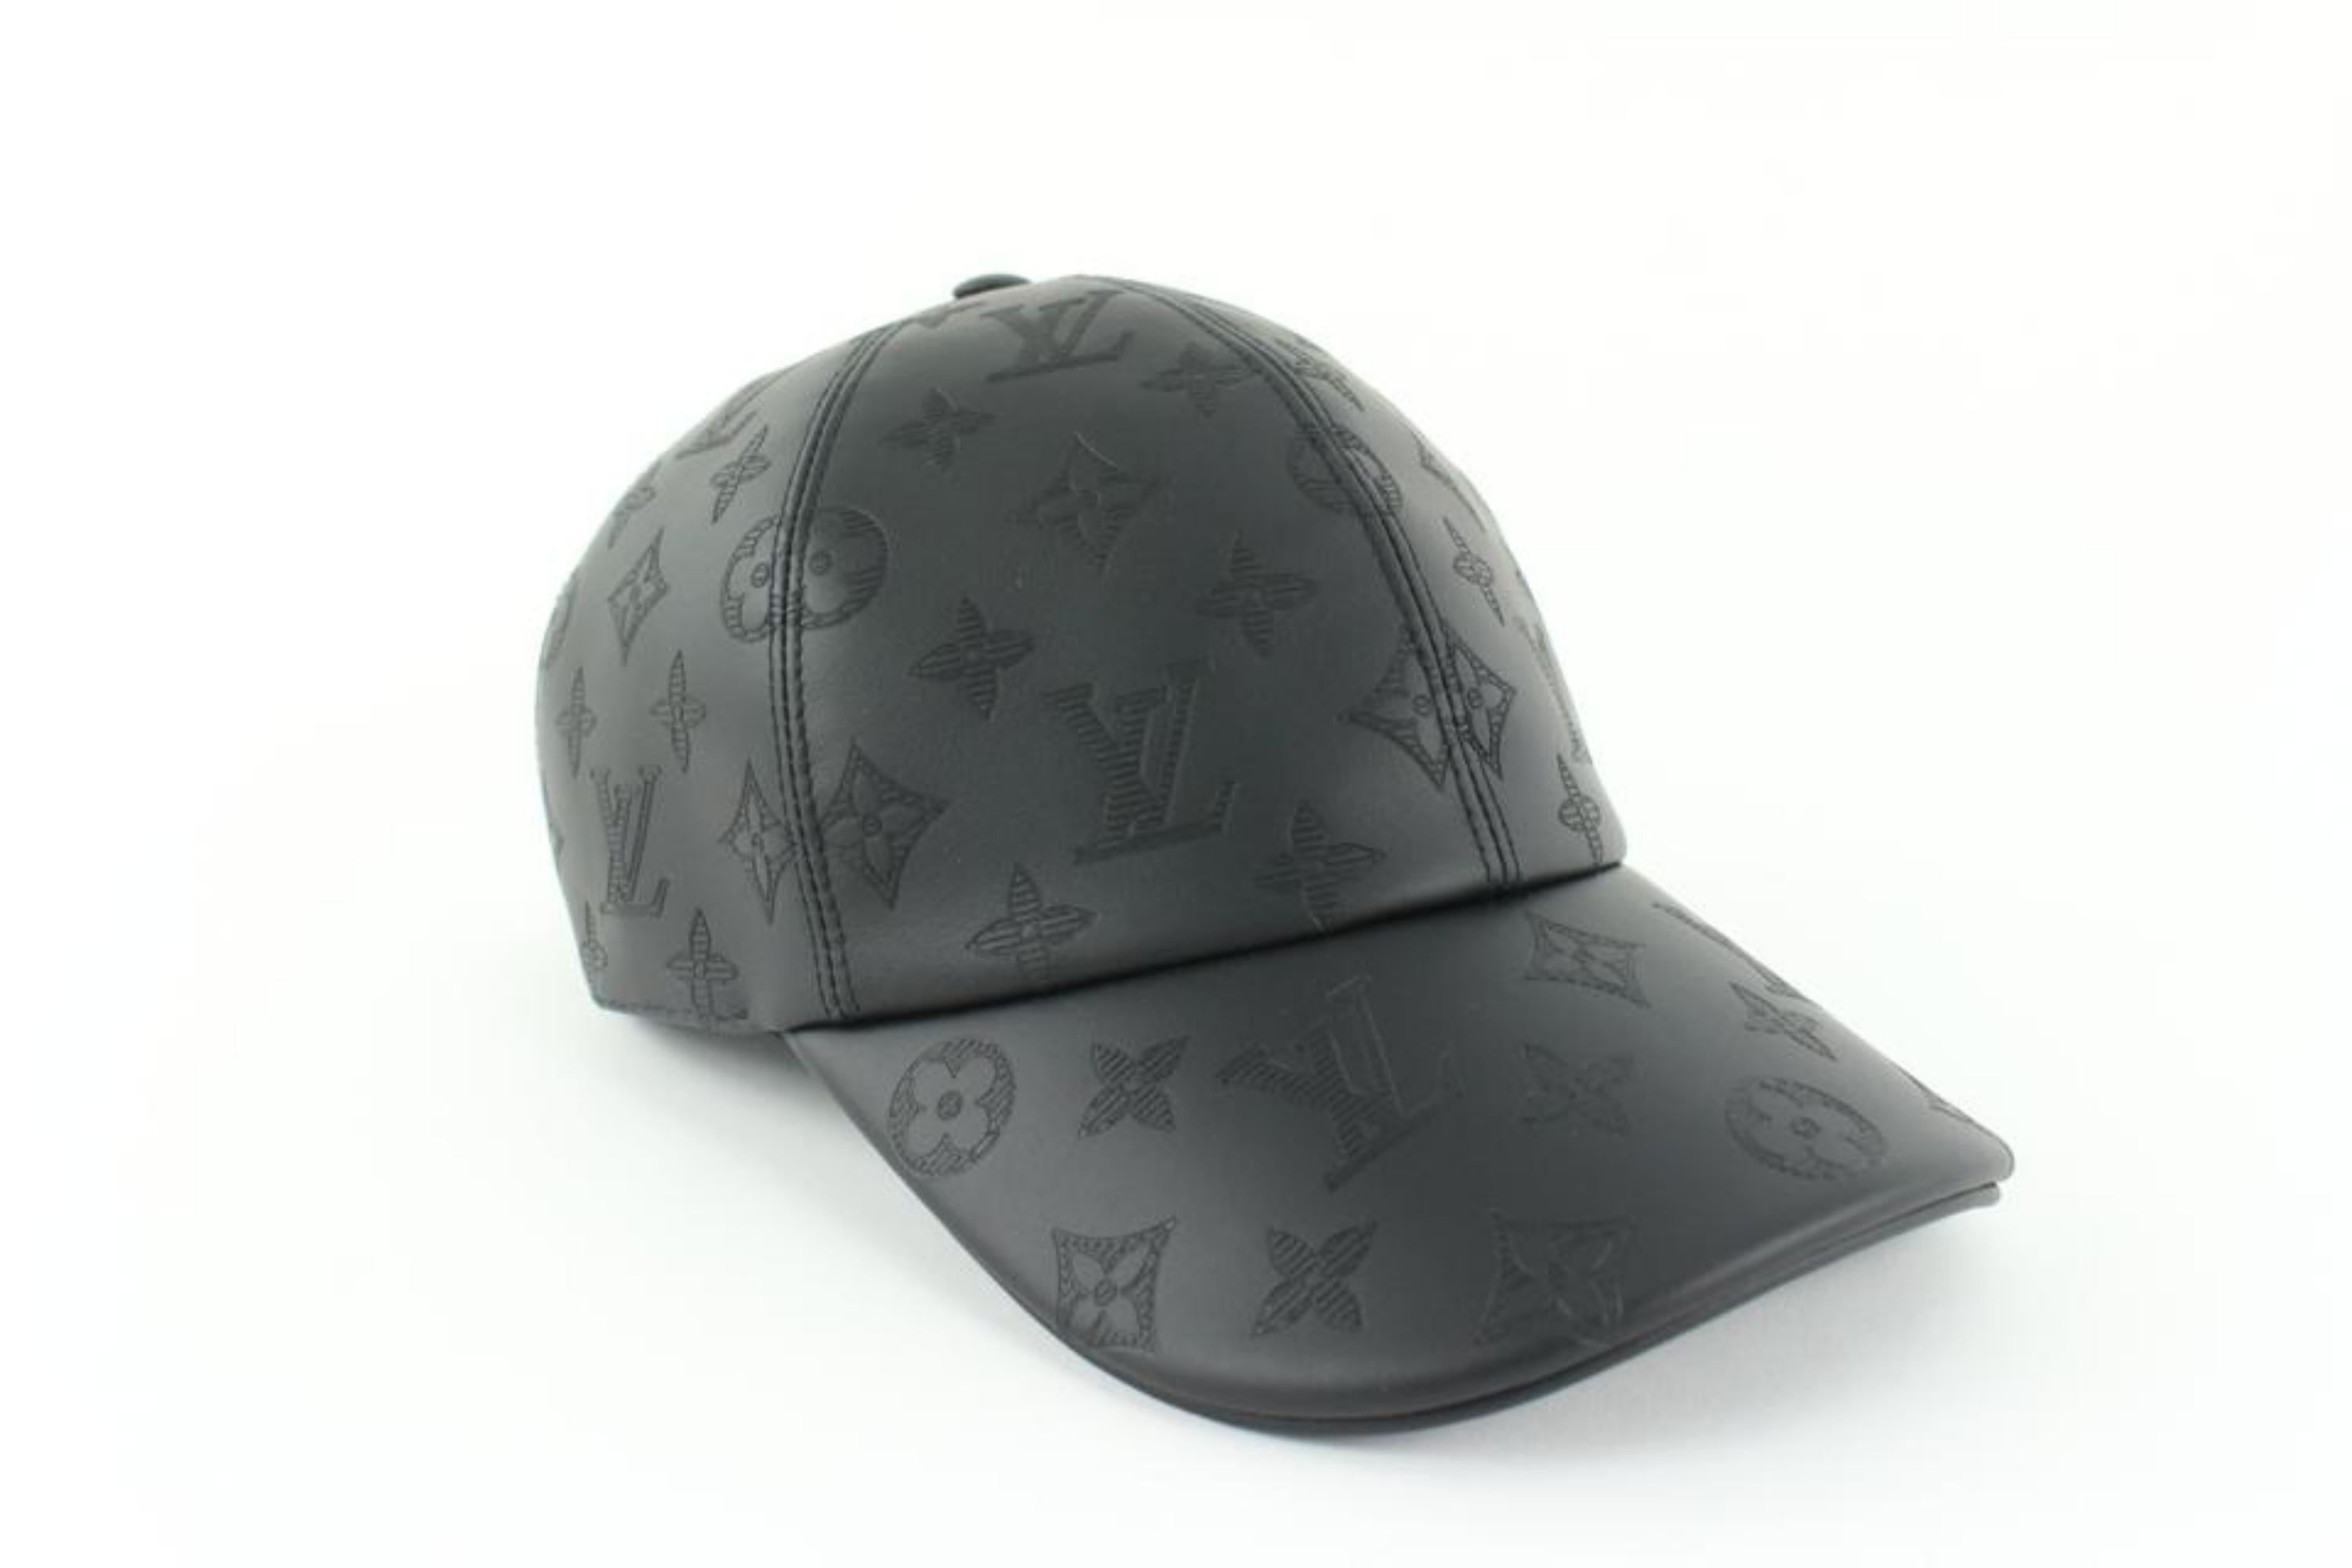 Louis Vuitton Black Leather Monogram Shadow Baseball Cap Hat 1231lv10 1